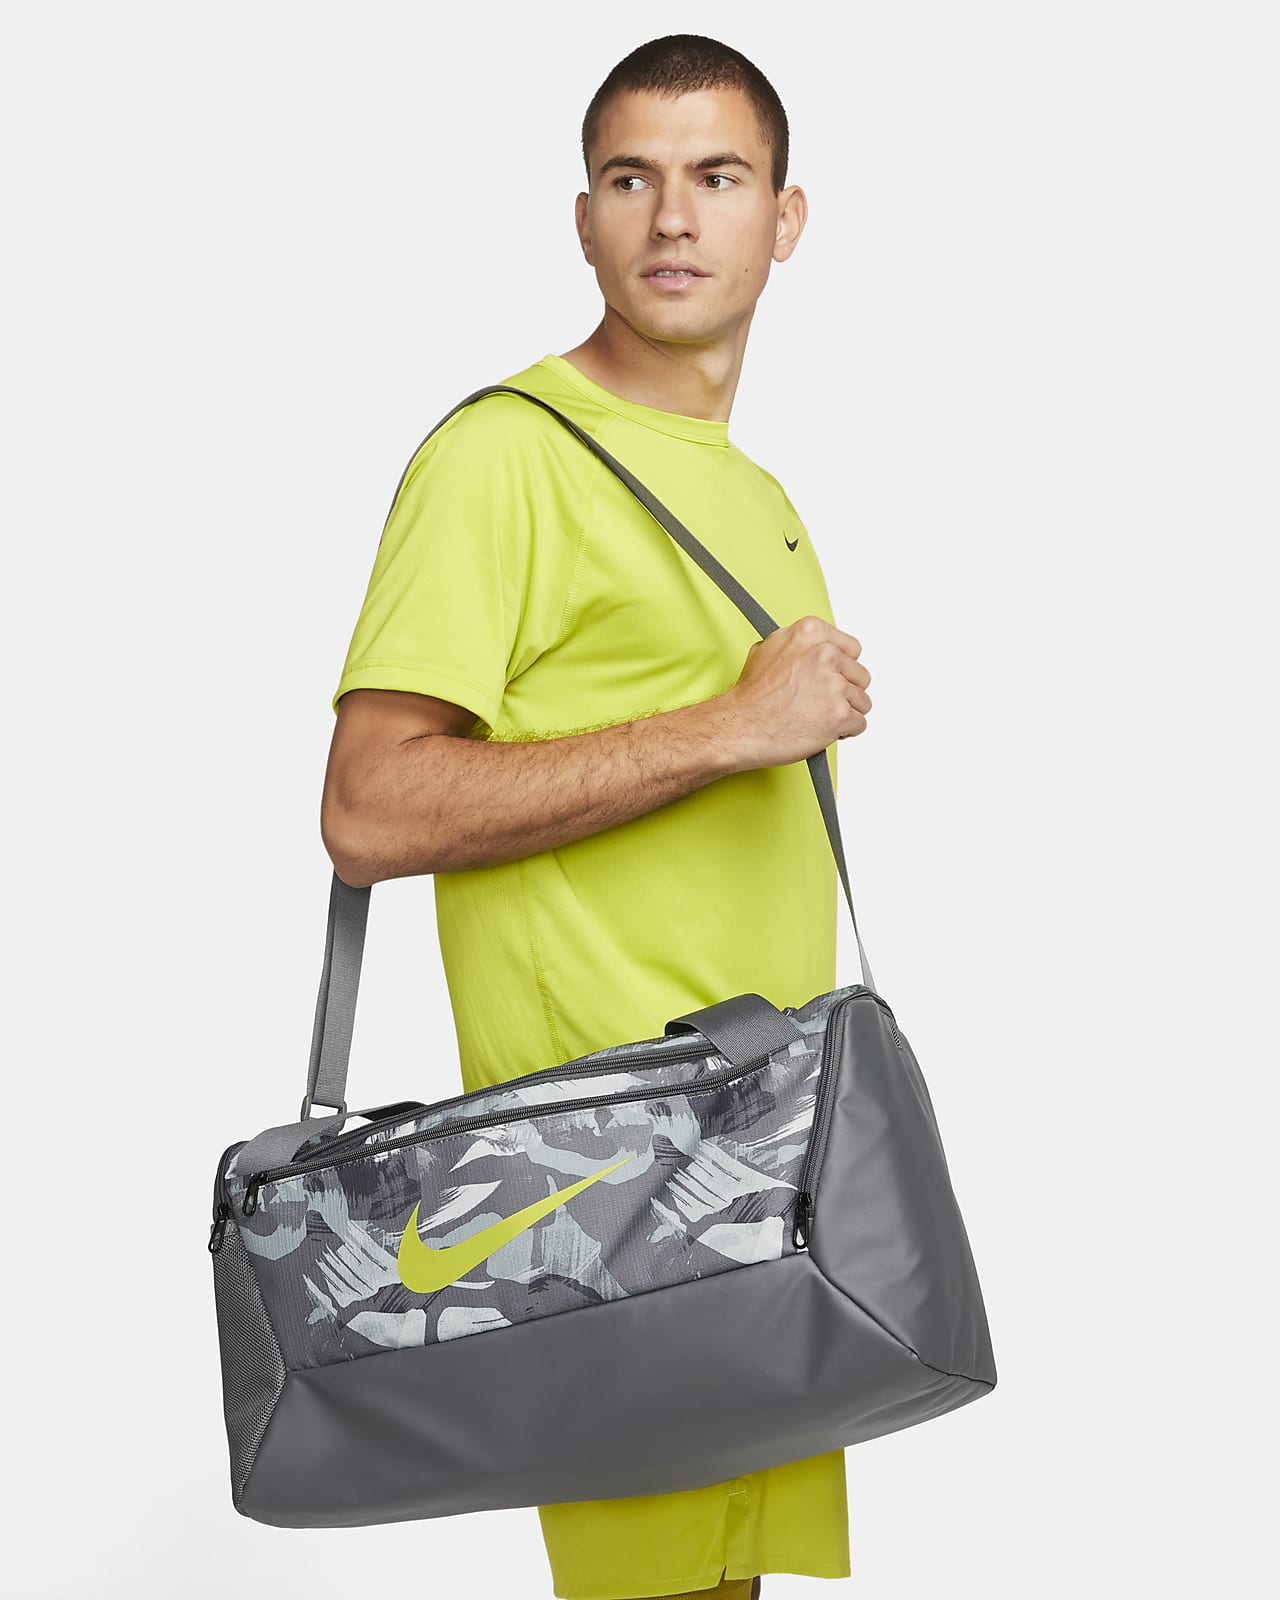 Nike Brasilia (Small) Duffel Bag